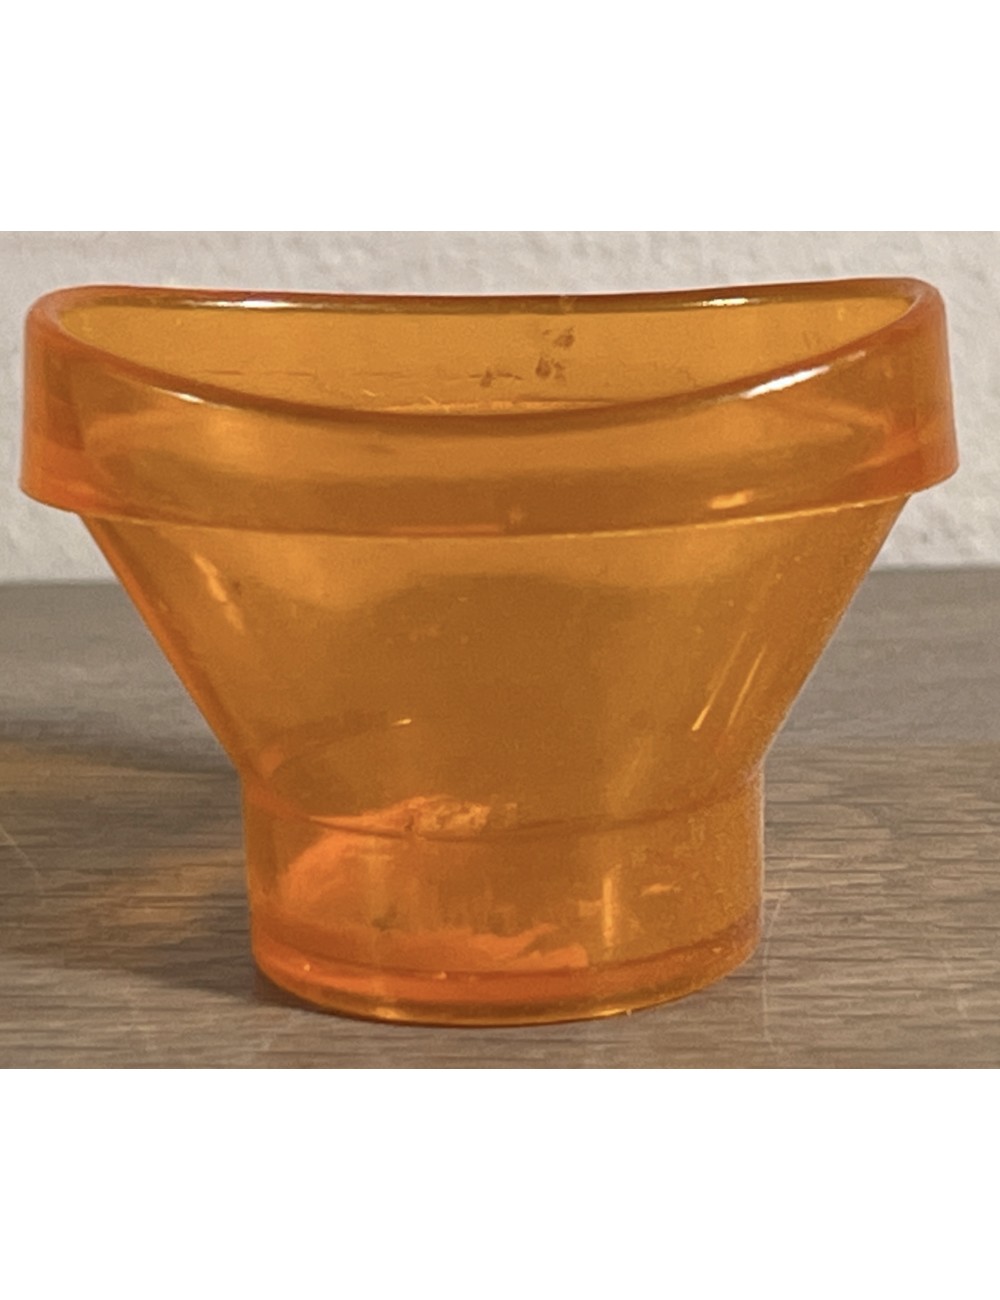 Oogbad / Oogglas - oranje plastic model - gemerkt OCAL